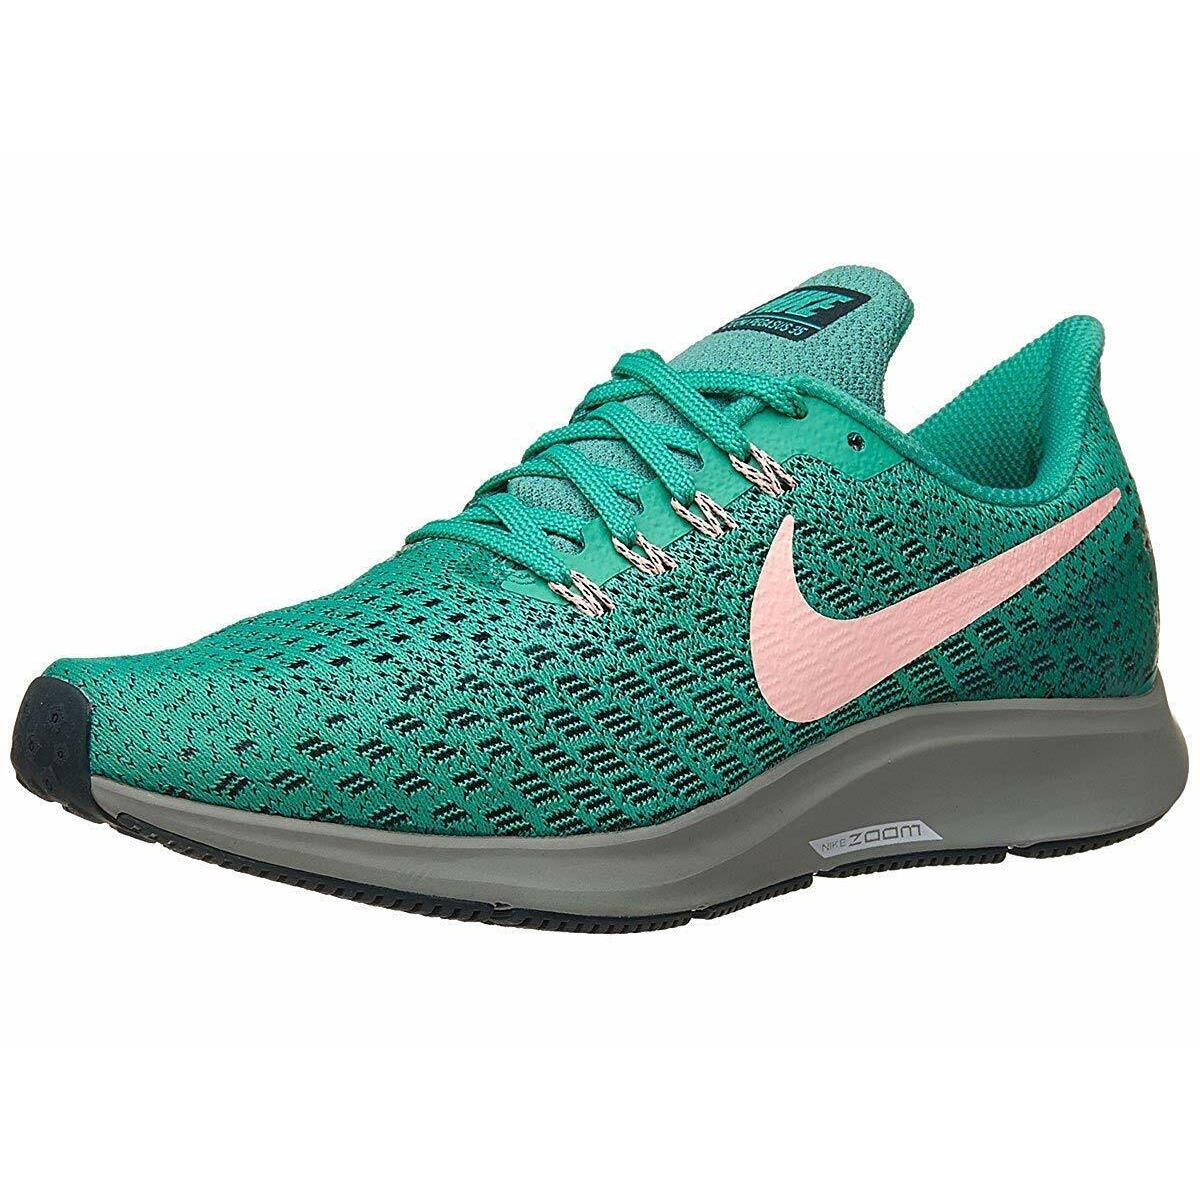 Nike Air Zoom Pegasus 35 Green Pink Running Shoes Women s Size 6 - Green